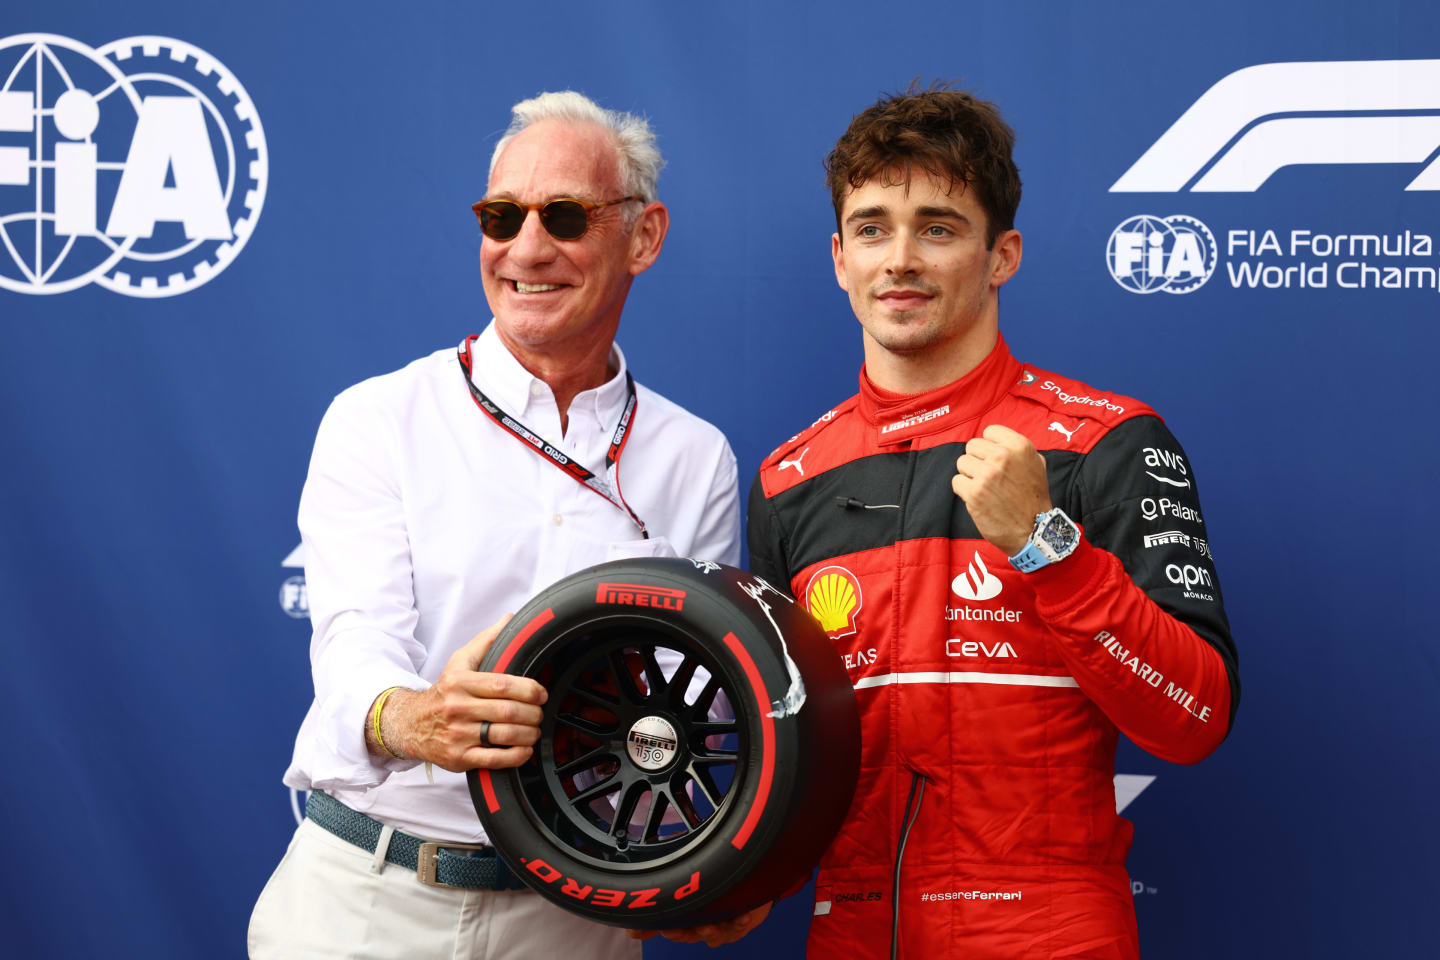 MONTE-CARLO, MONACO - MAY 28: Pole position qualifier Charles Leclerc of Monaco and Ferrari is